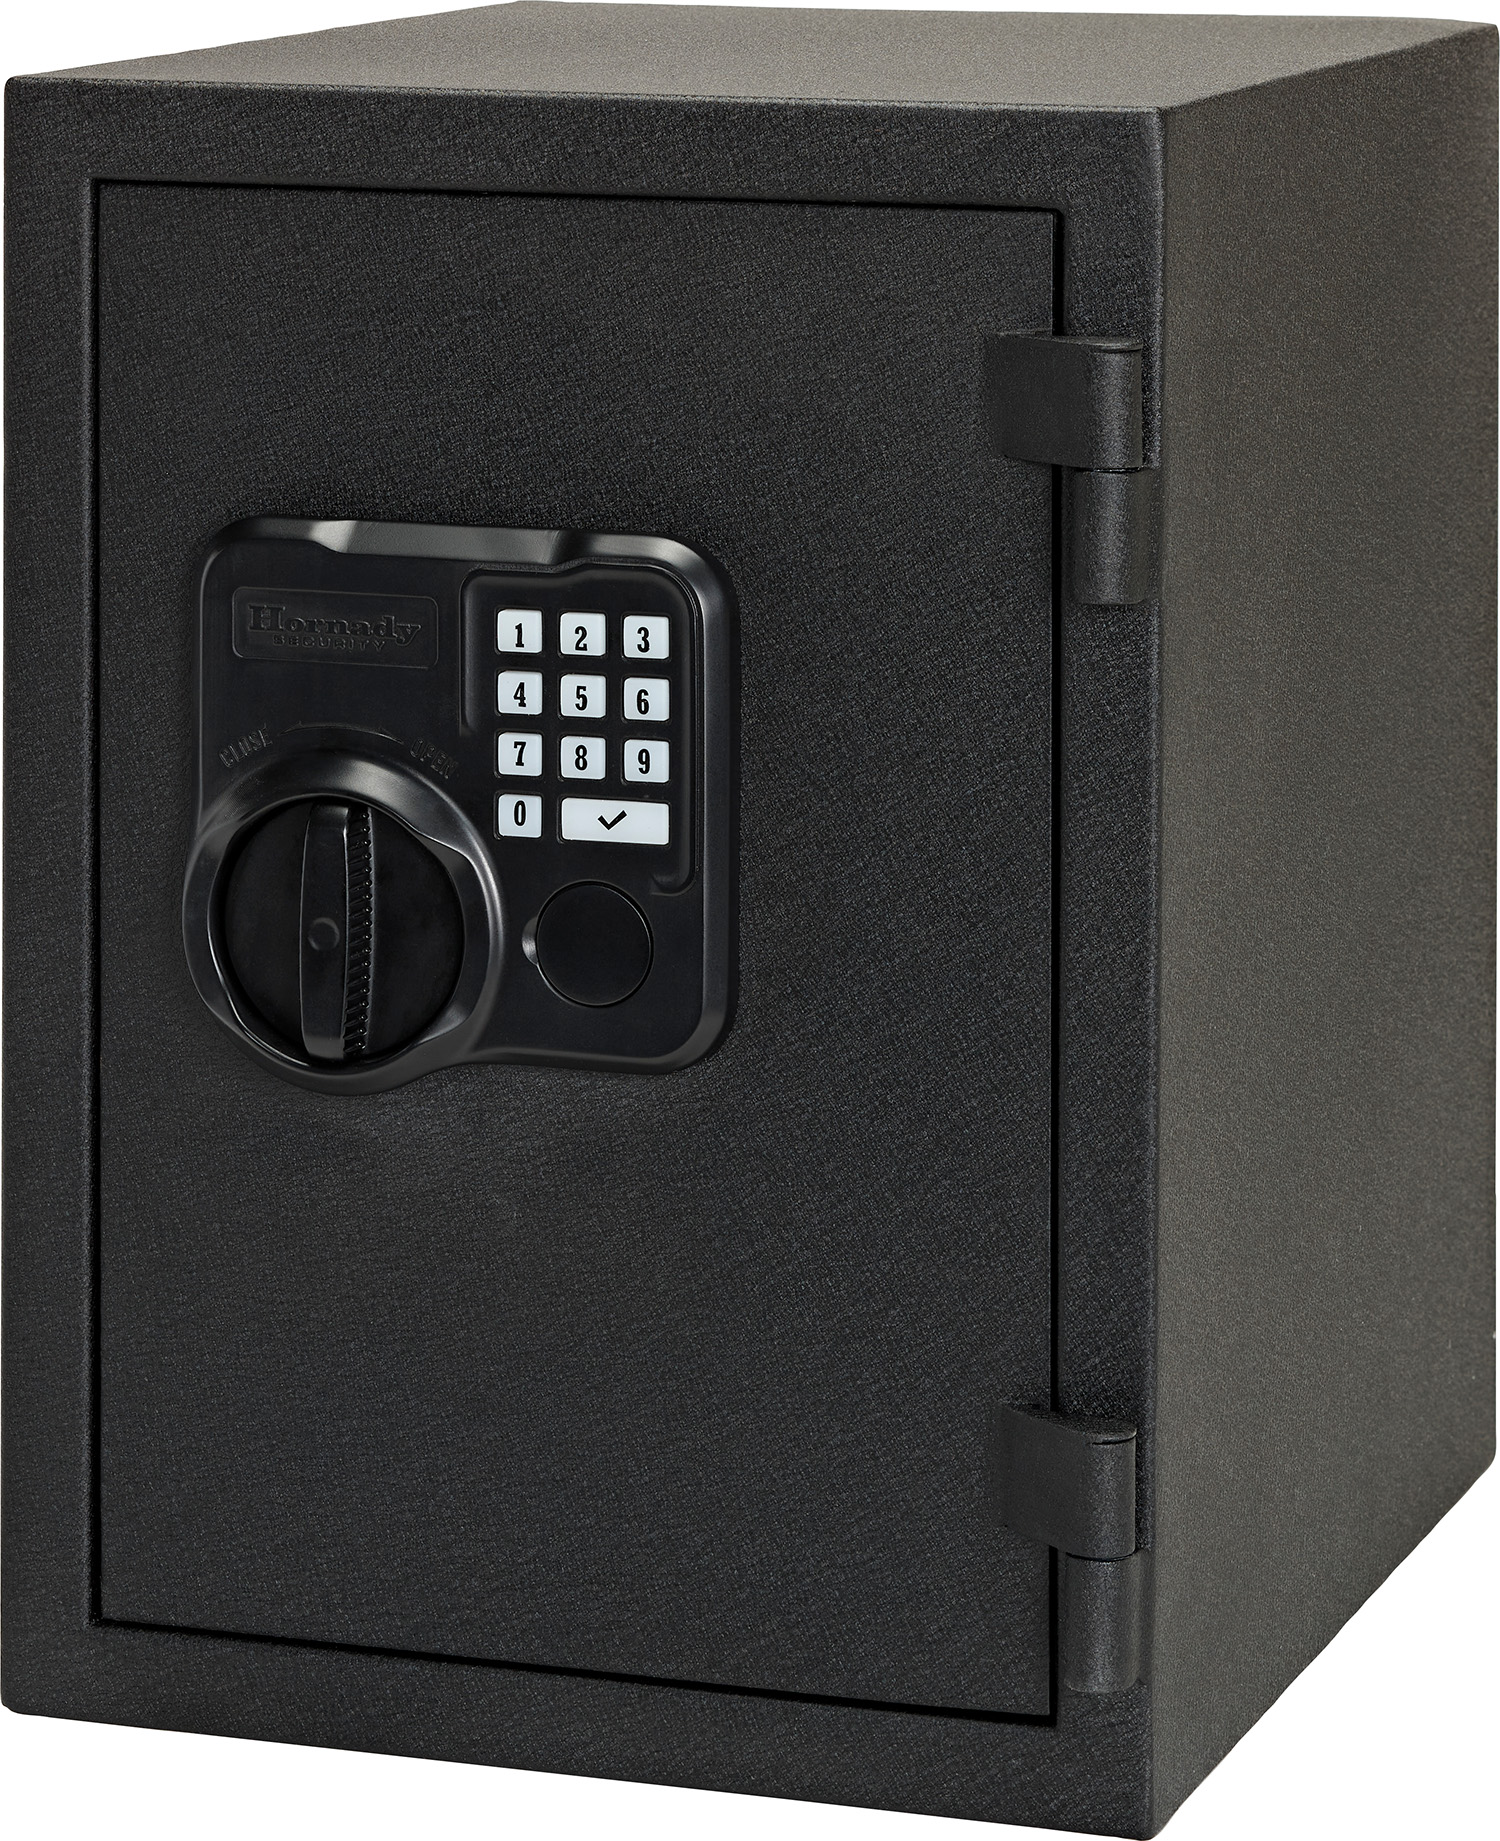 Hornady 95407 Fireproof Safe  Keypad/Key Entry Black Powder Coat Black Steel Holds 2 Handguns 12